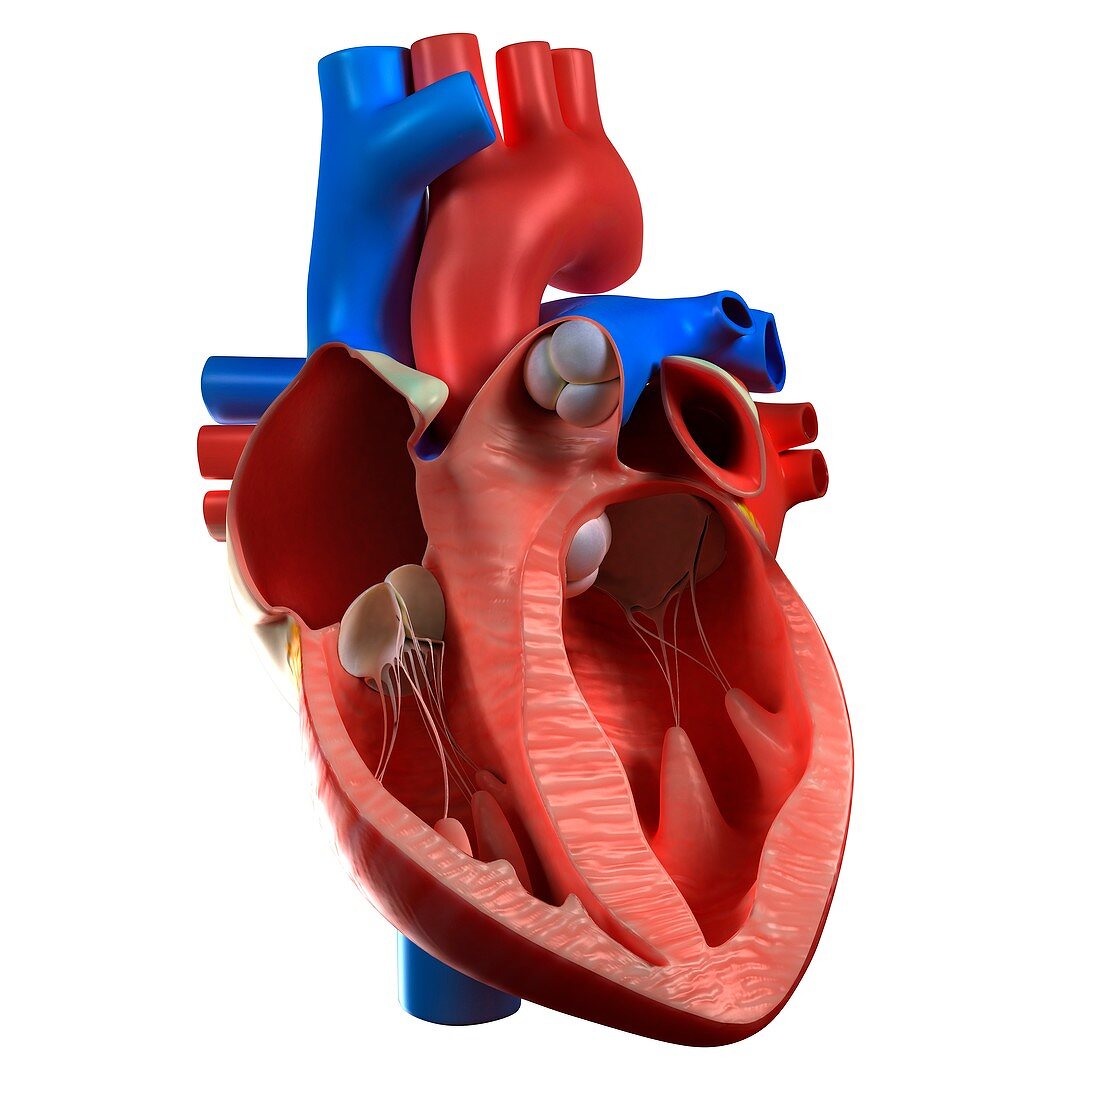 Heart anatomy,artwork